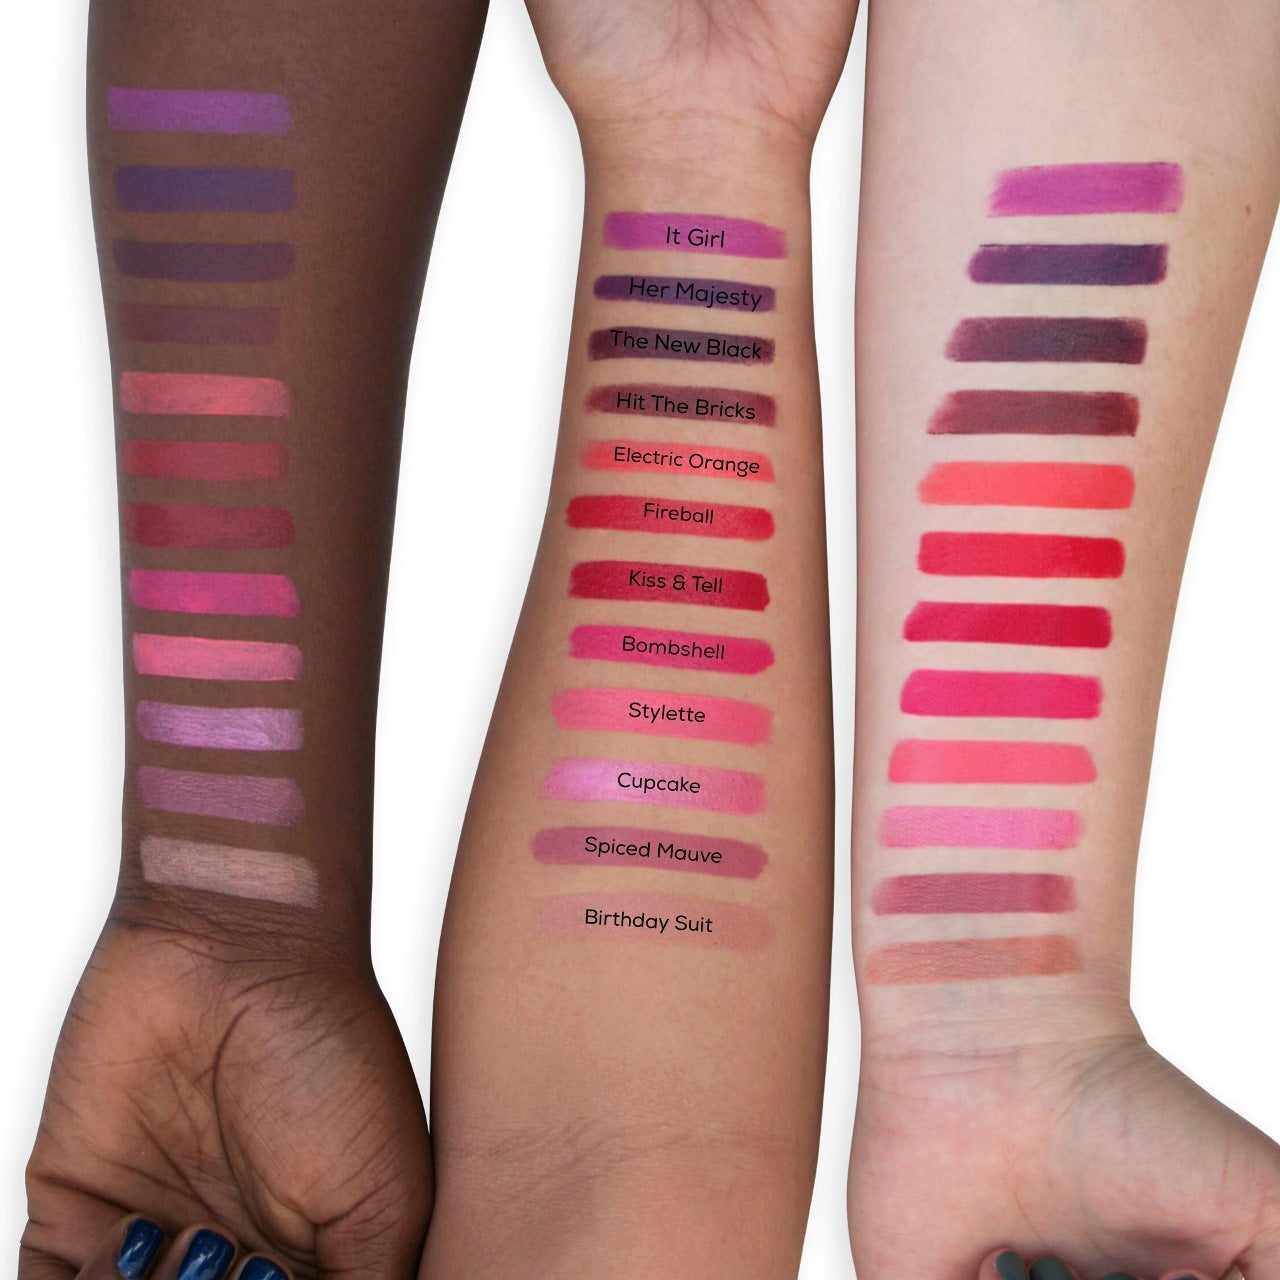 Styli-Style Luxe Lips Creamy Lipstick - The New Black - ADDROS.COM